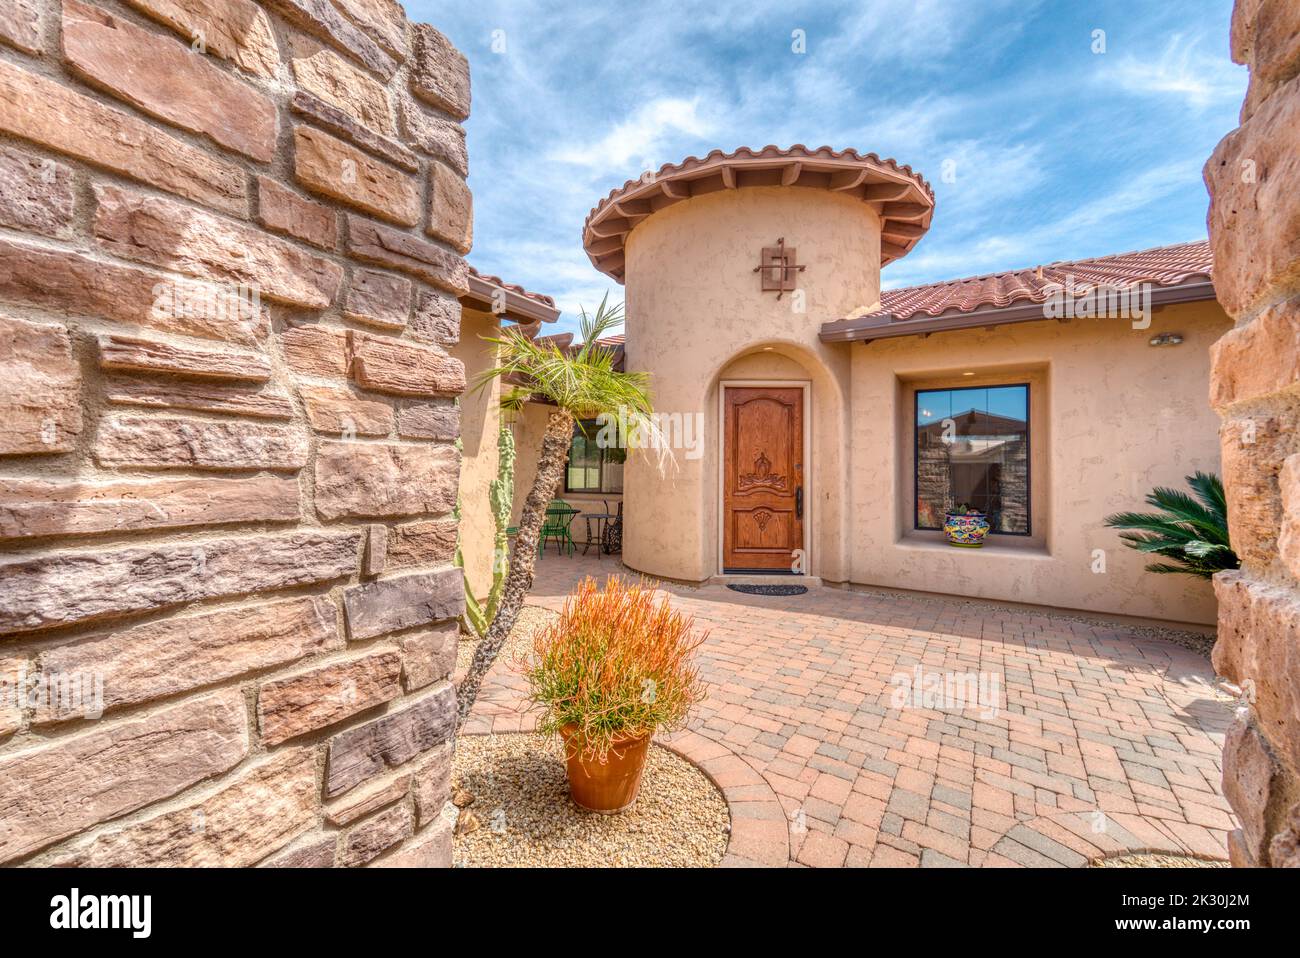 A Spanish southwestern home in arizona Stock Photo